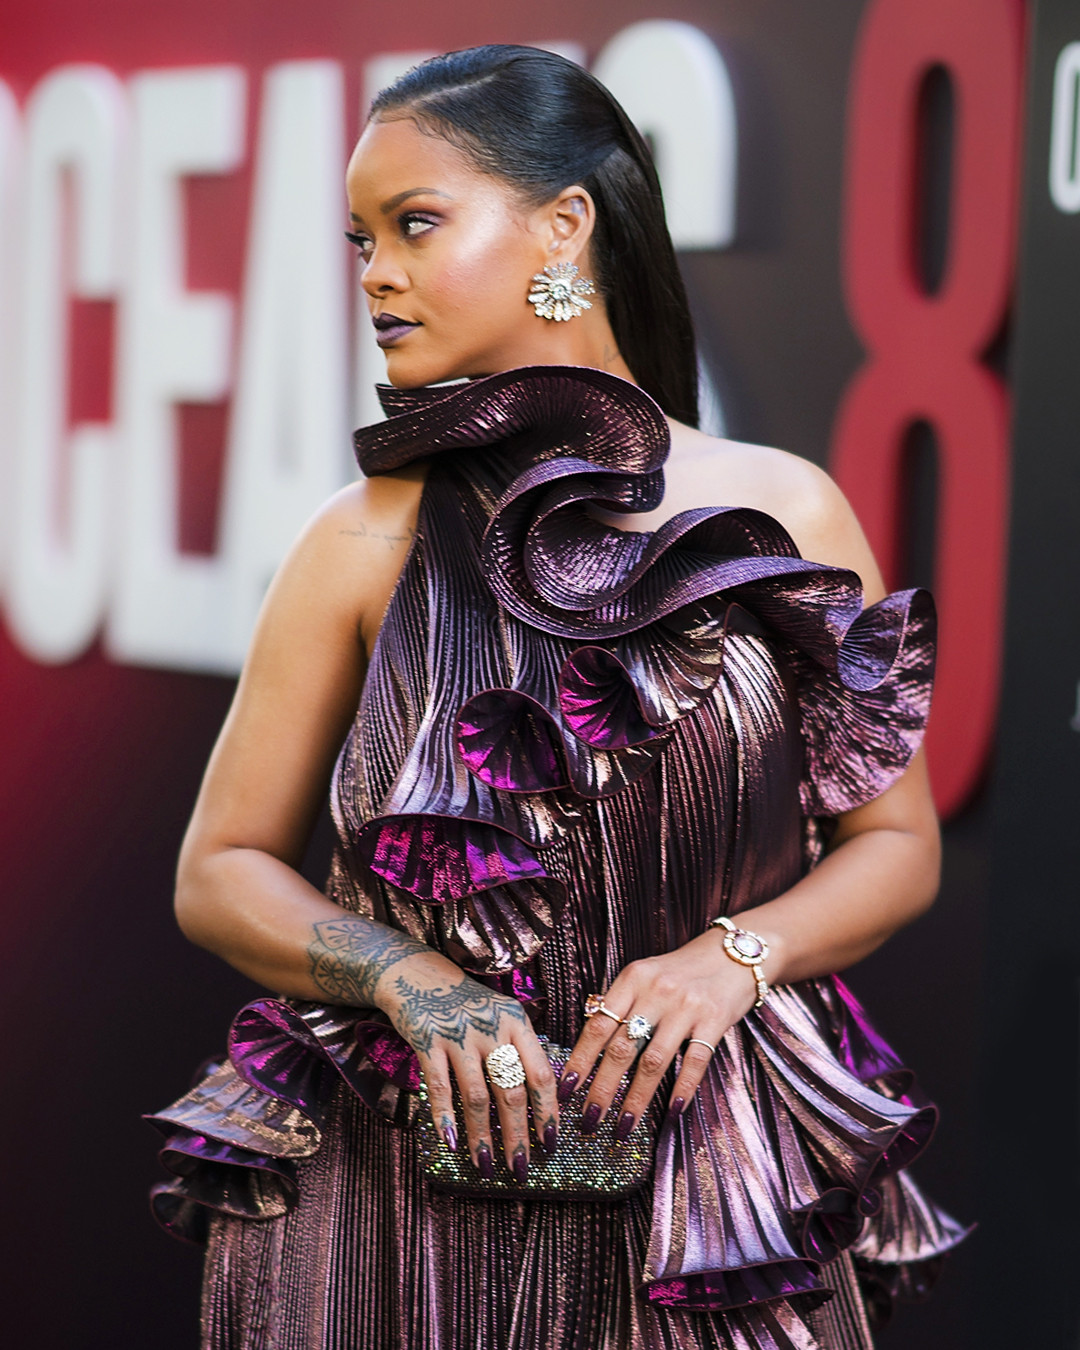 A Closer Look at Rihanna's $35,000 Purse Collection